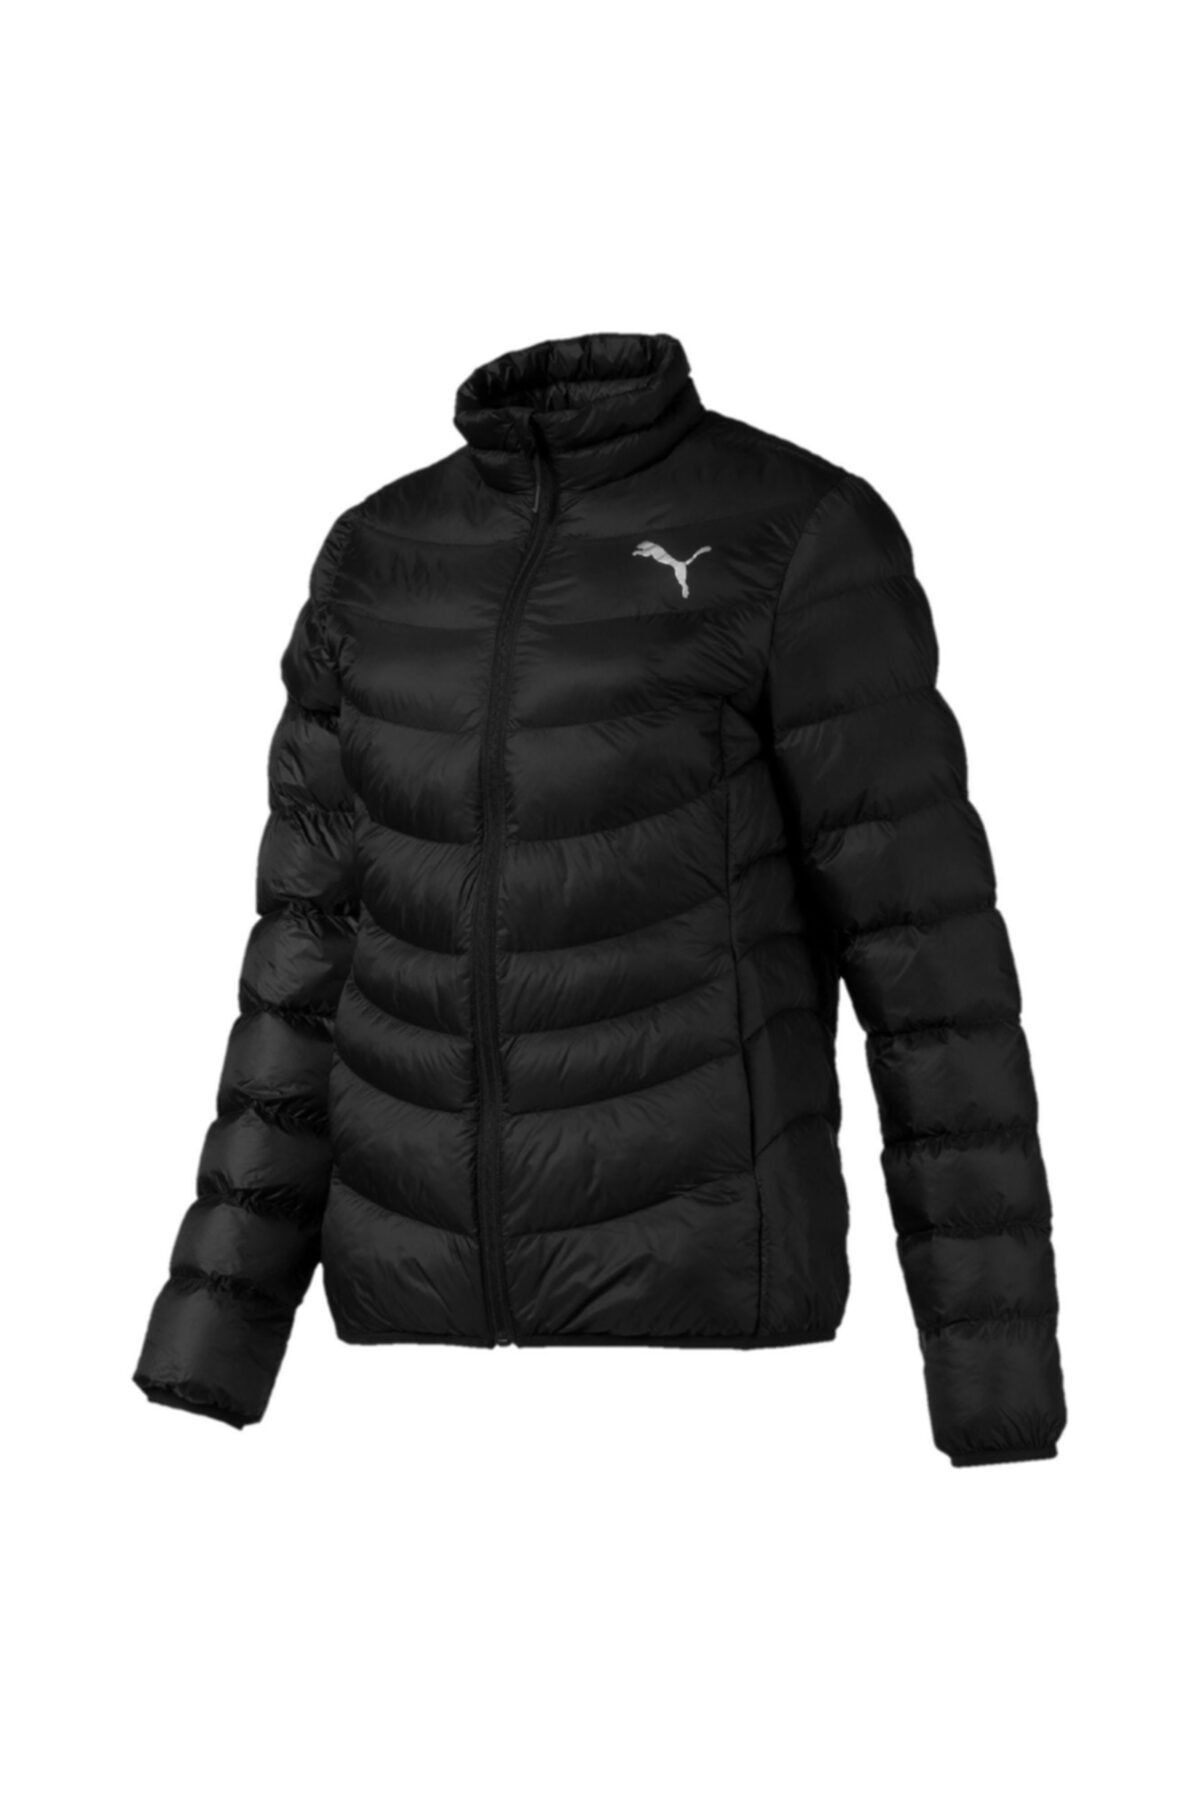 Puma Ultralight Warmcell Jacket Kadın Mont - 58004201